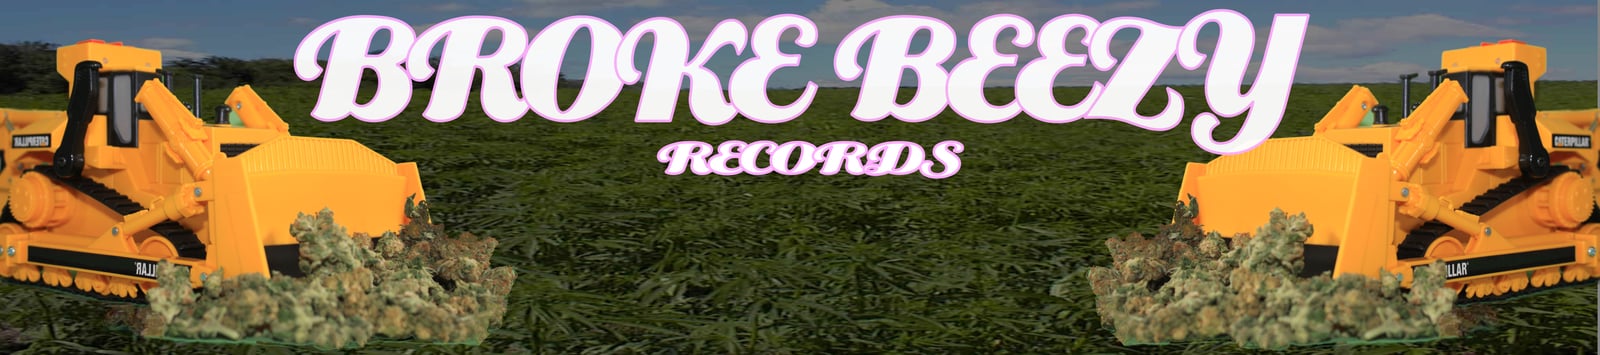 BROKE BEEZY Records